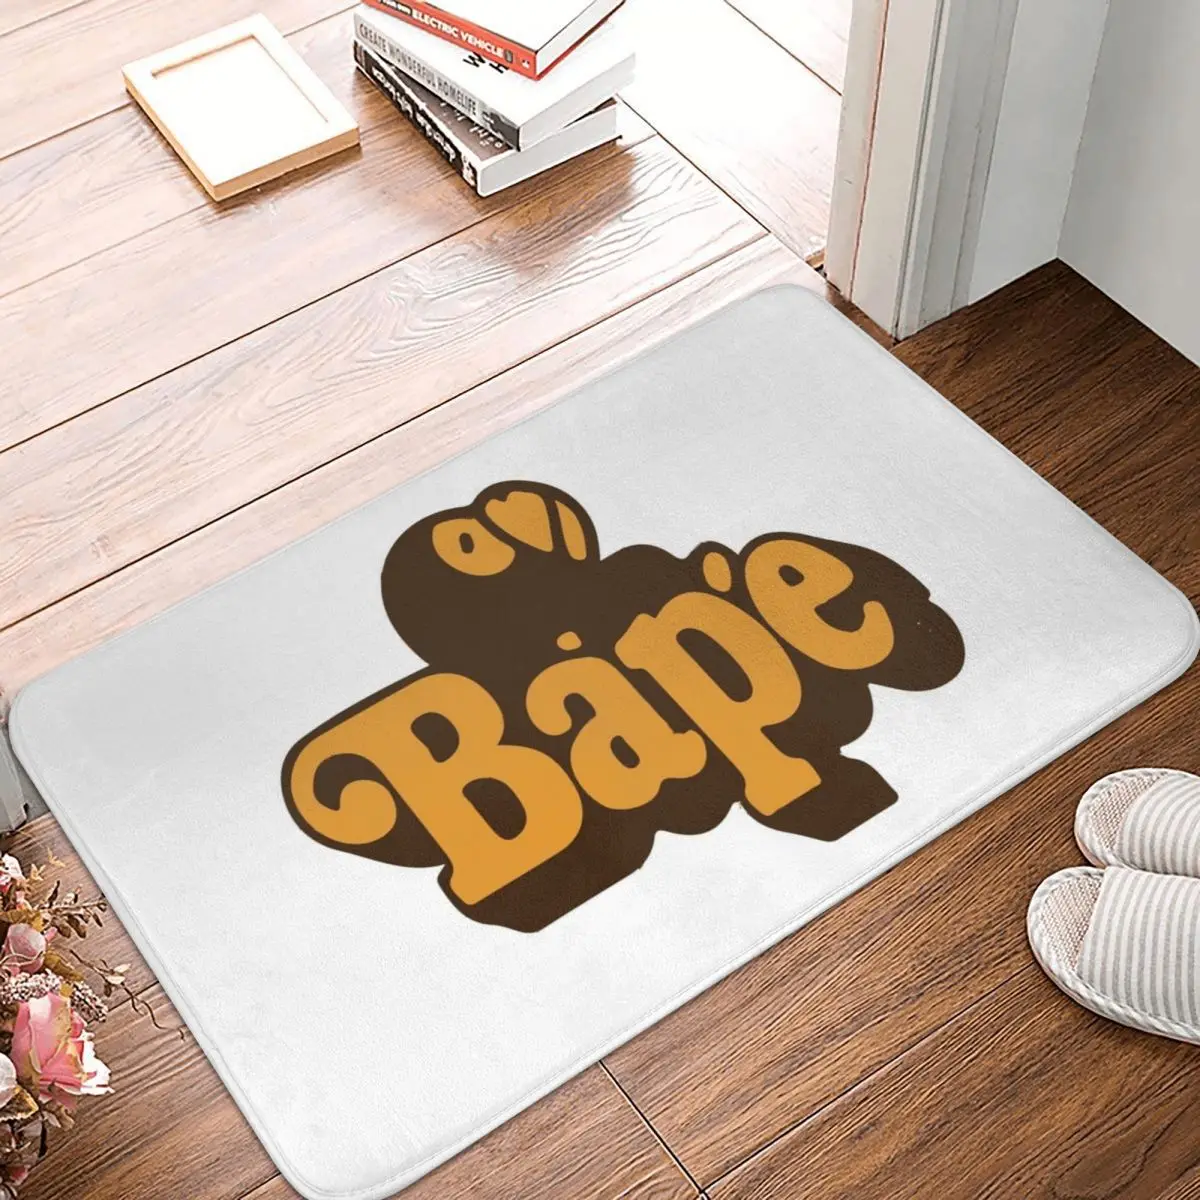 BAPE A Bathing Ape Round Bathroom Non-slip Door Mat Floor Mat Rug Carpet Bathmat 